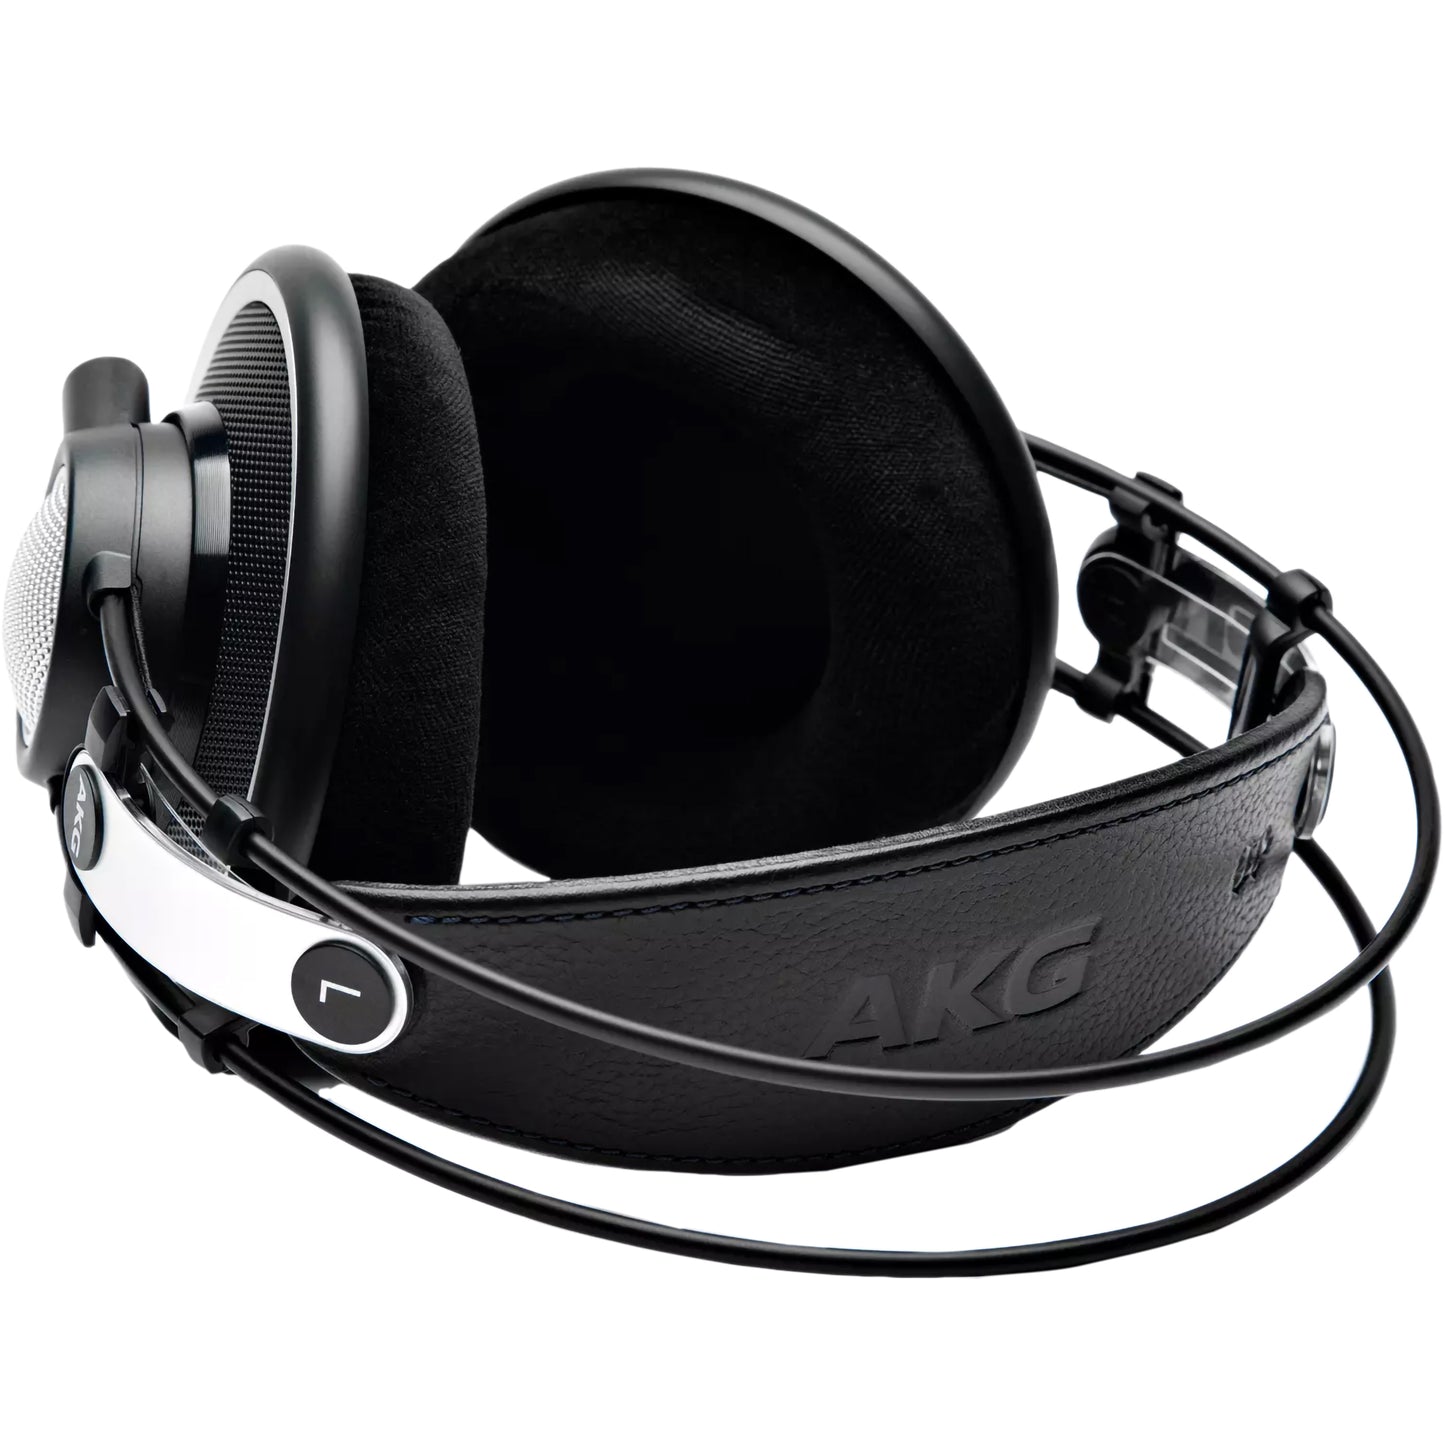 AKG K702 Professional Headphones